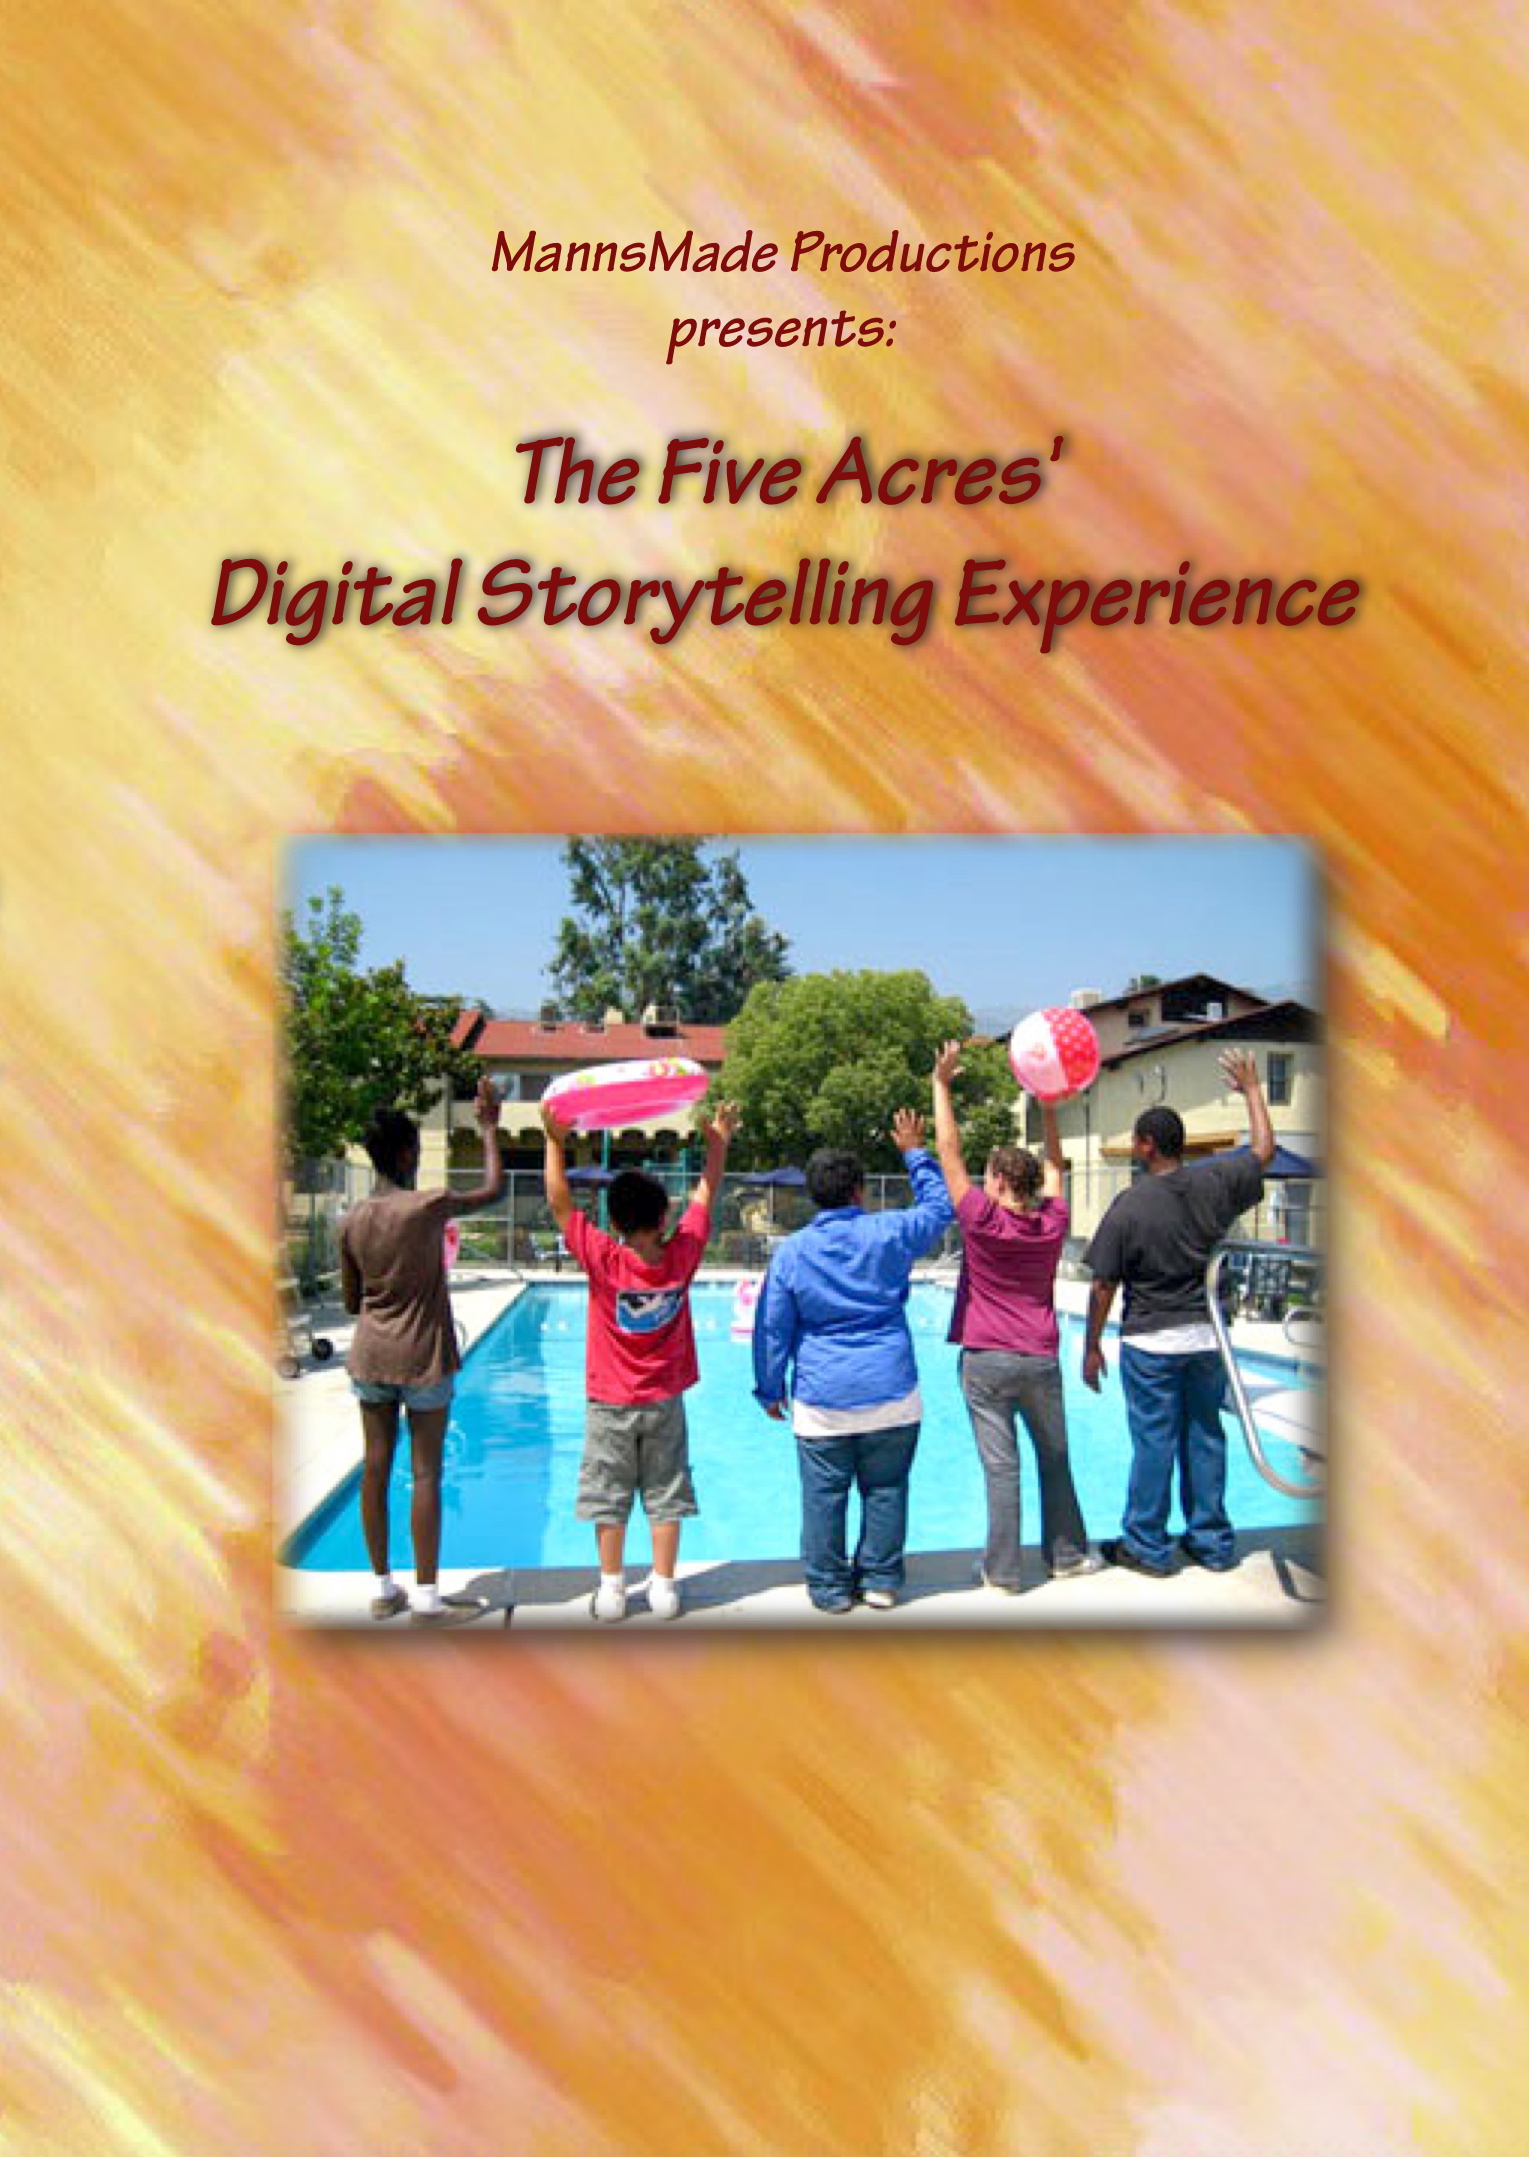 Five Acres' Digital Storytelling Experience